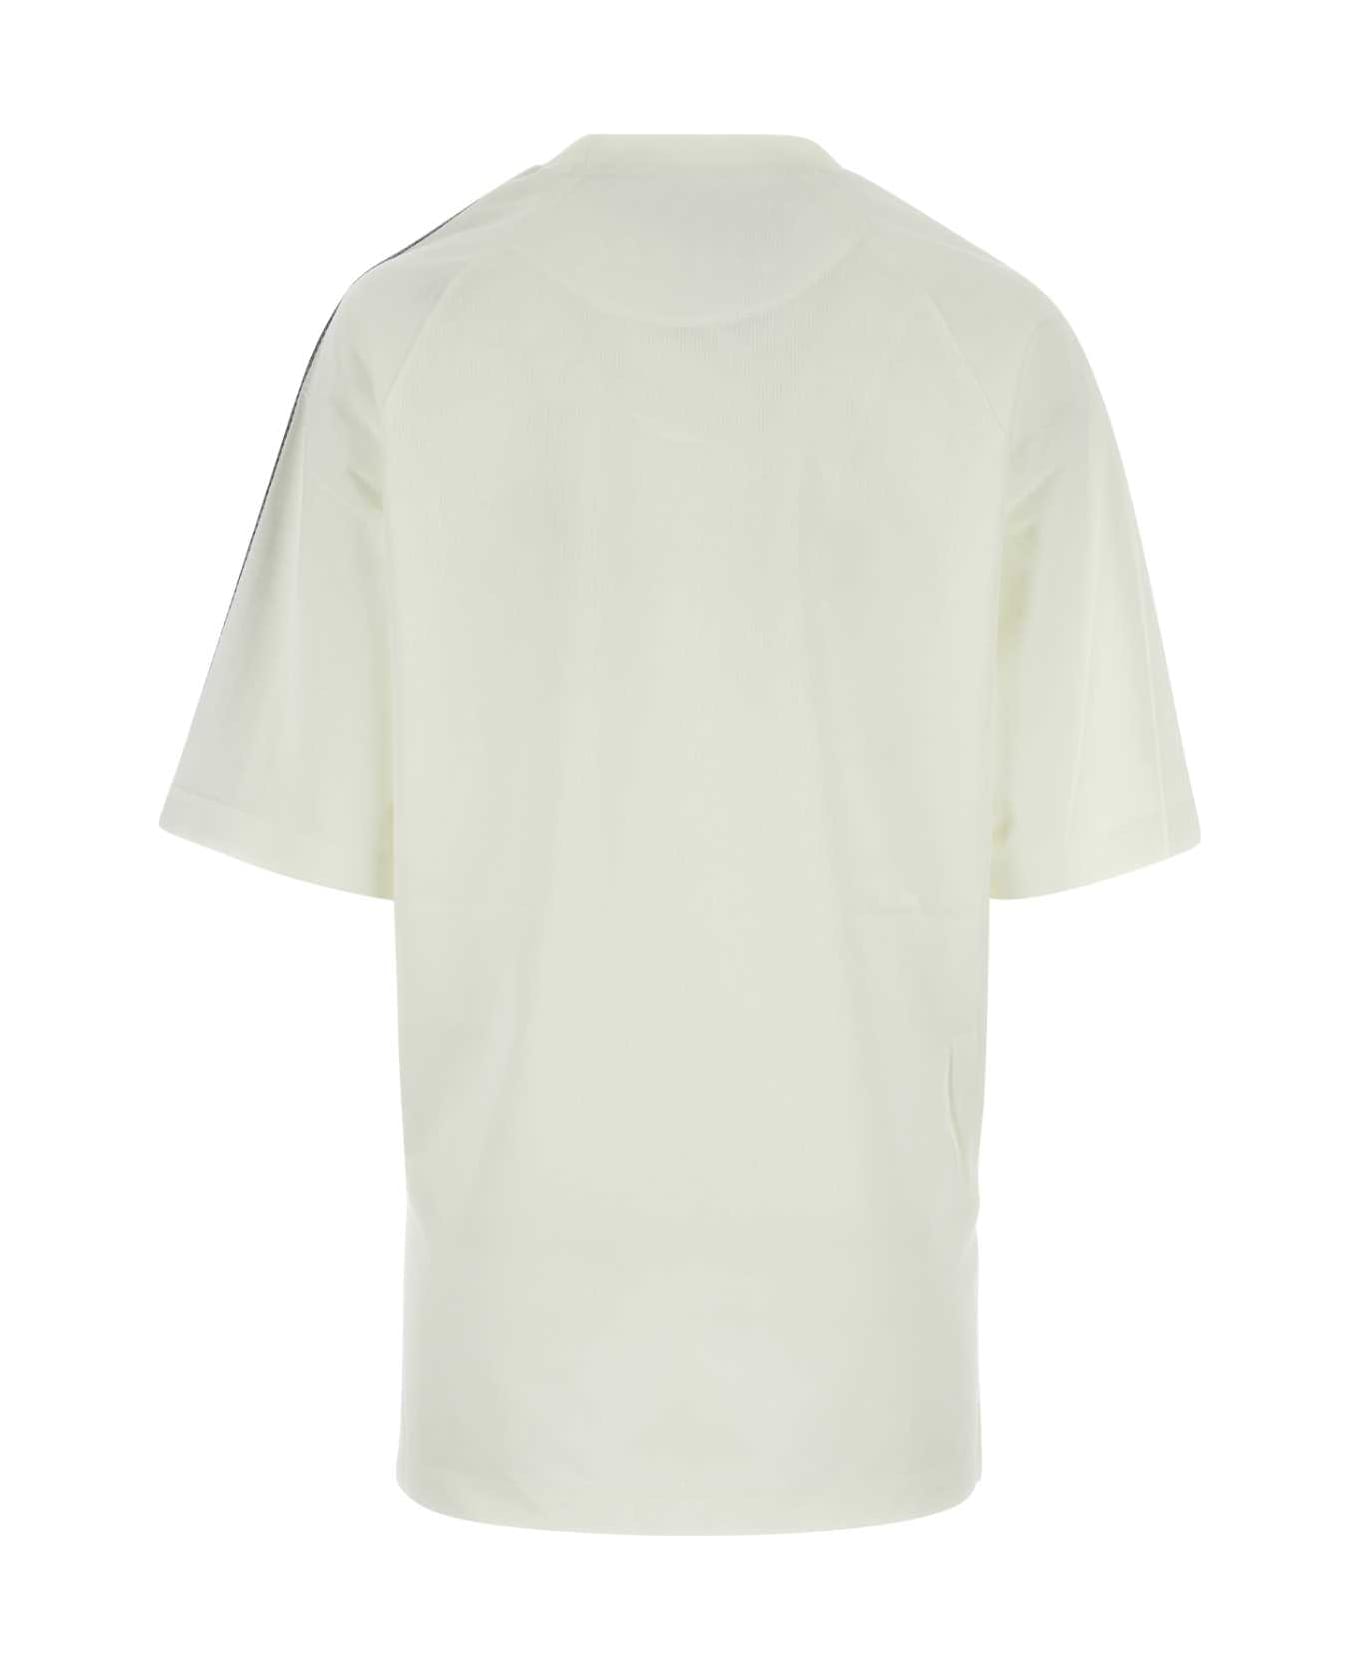 Y-3 White Cotton Blend Oversize T-shirt - OWHITE Tシャツ